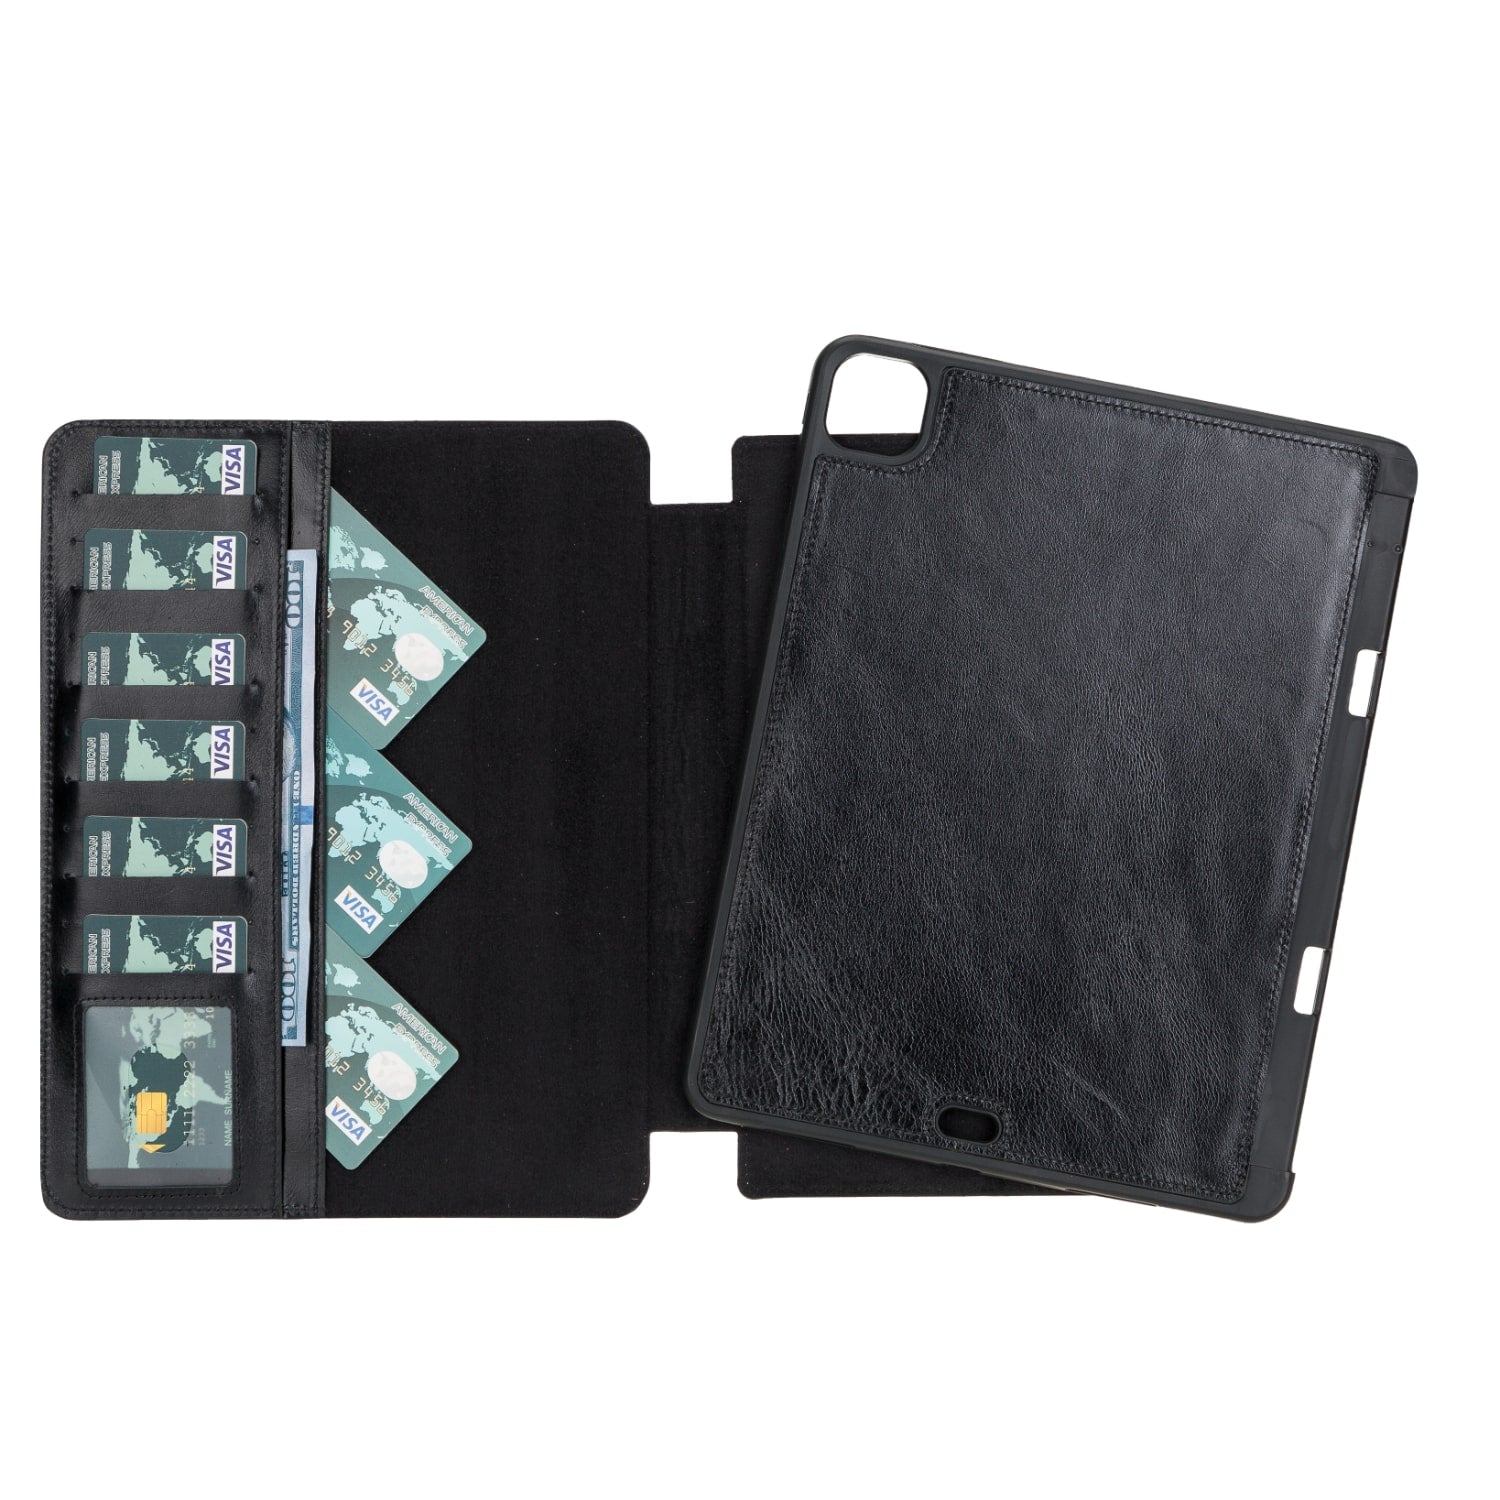 Black Leather iPad Pro 11 Inc Smart Folio Case with Apple Pen Holder - Bomonti - 1